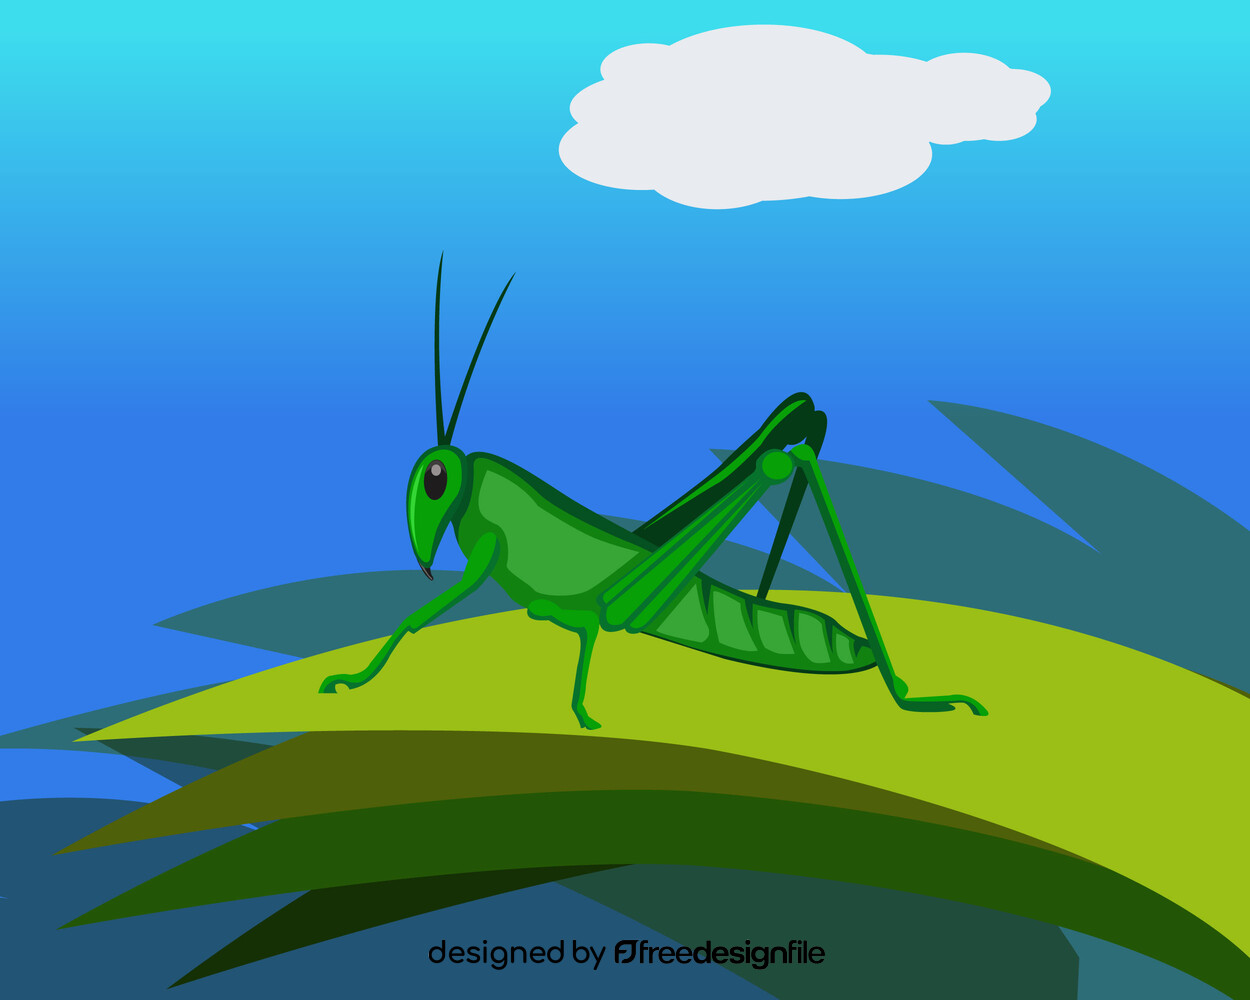 Grasshopper vector image